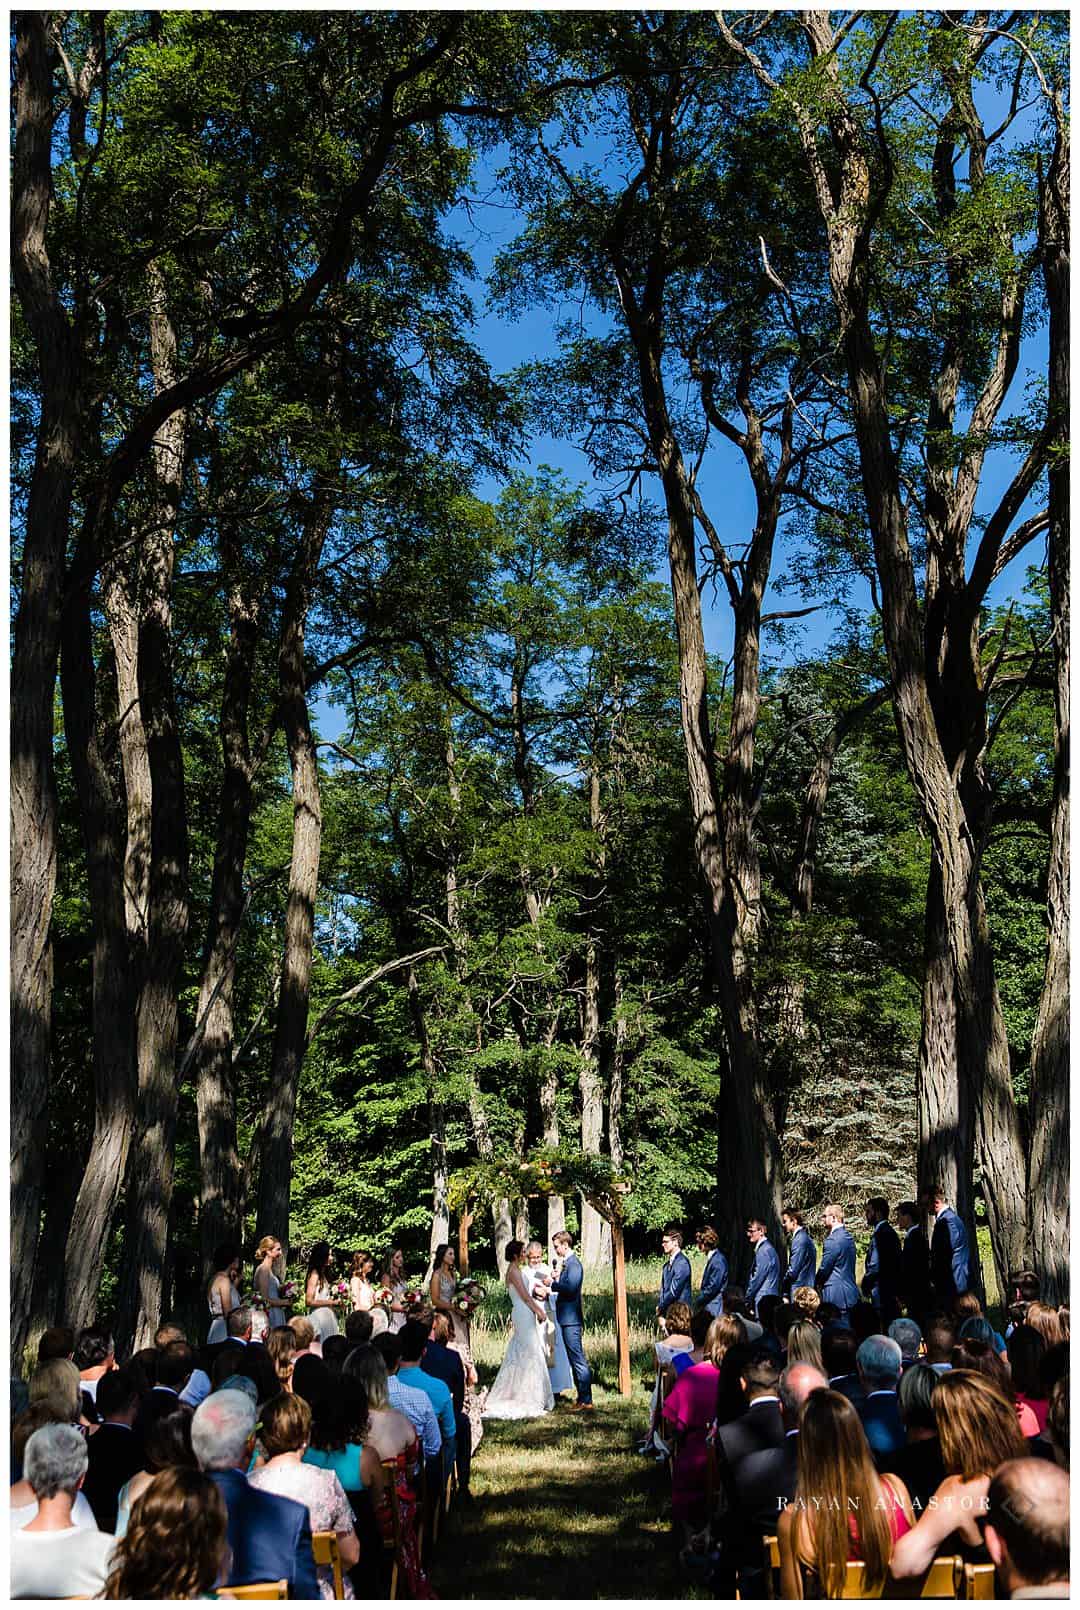 Wedding under the locust trees in northern michigan